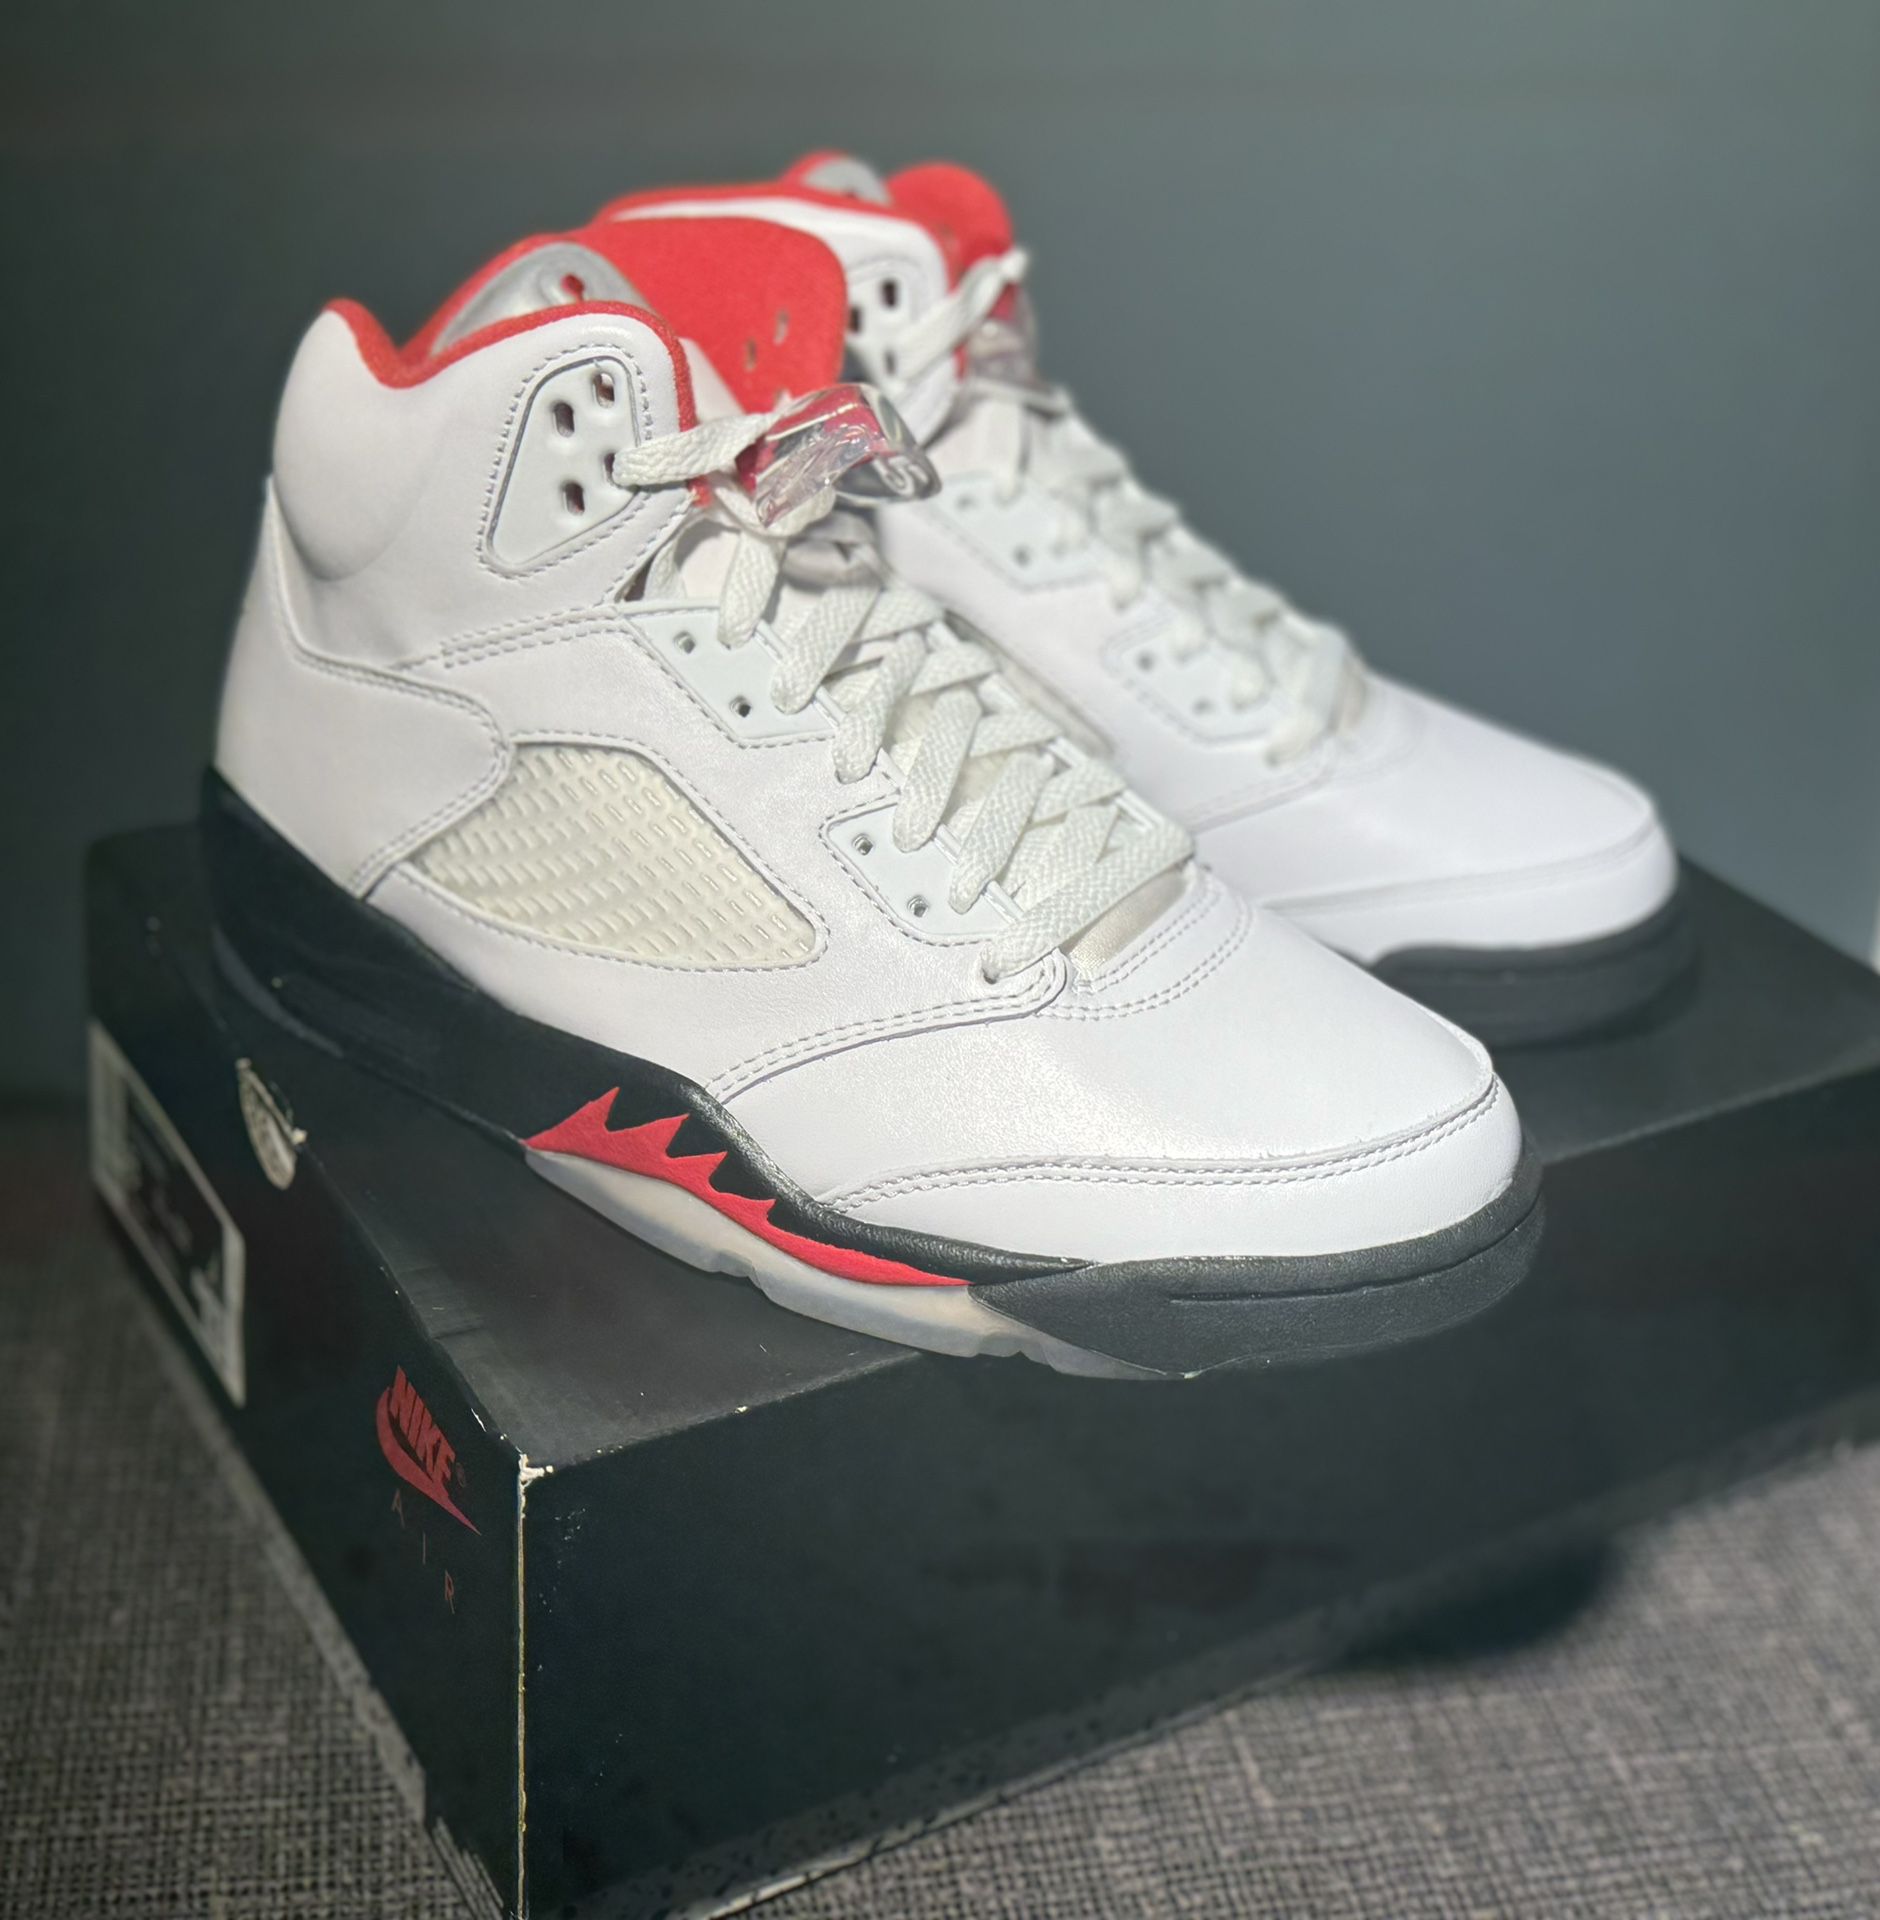 Air Jordan Retro 5 “Fire Red” Size 8